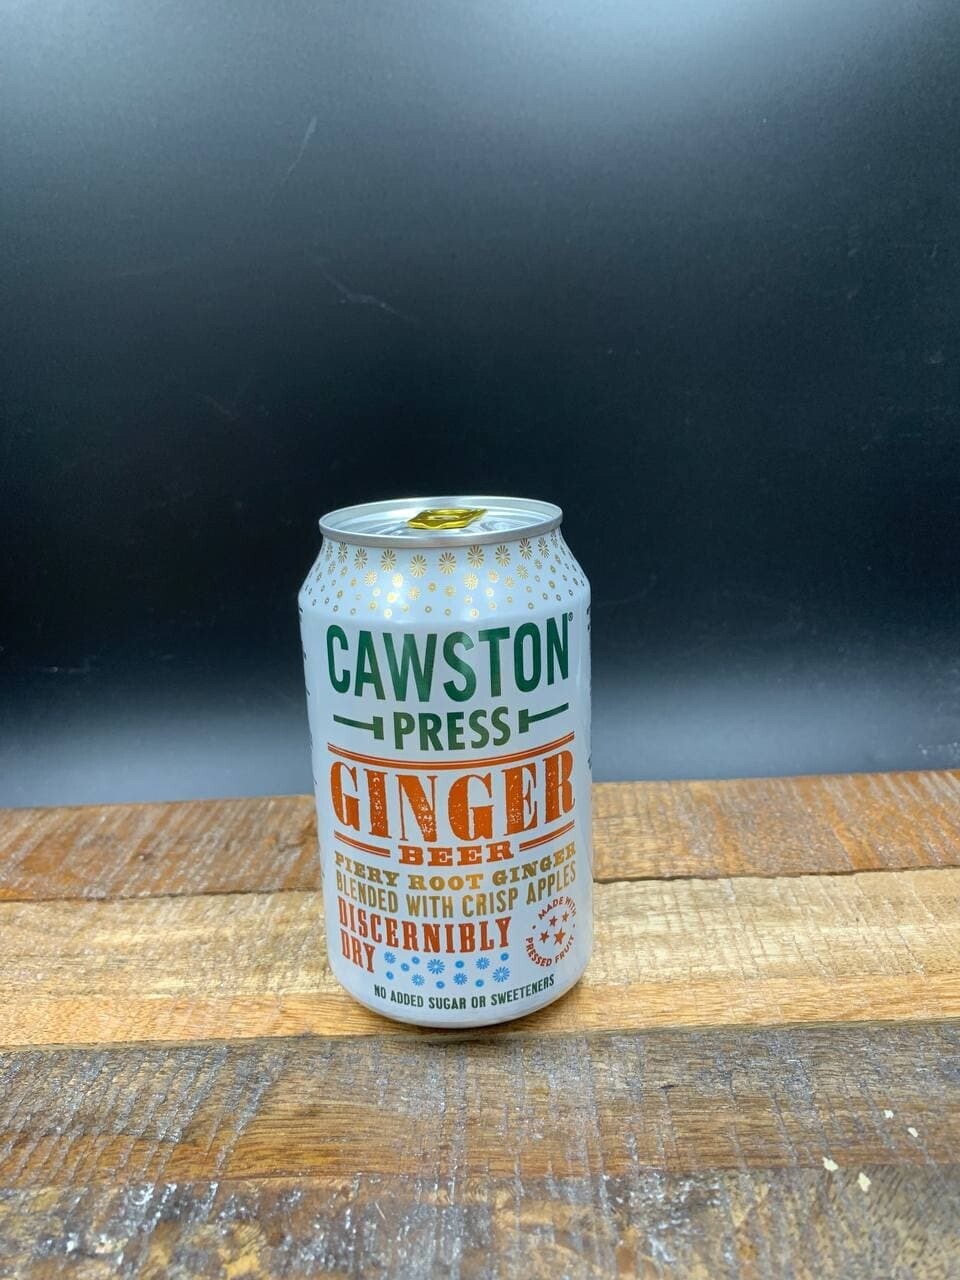 Cawston Press Ginger Beer 330ml